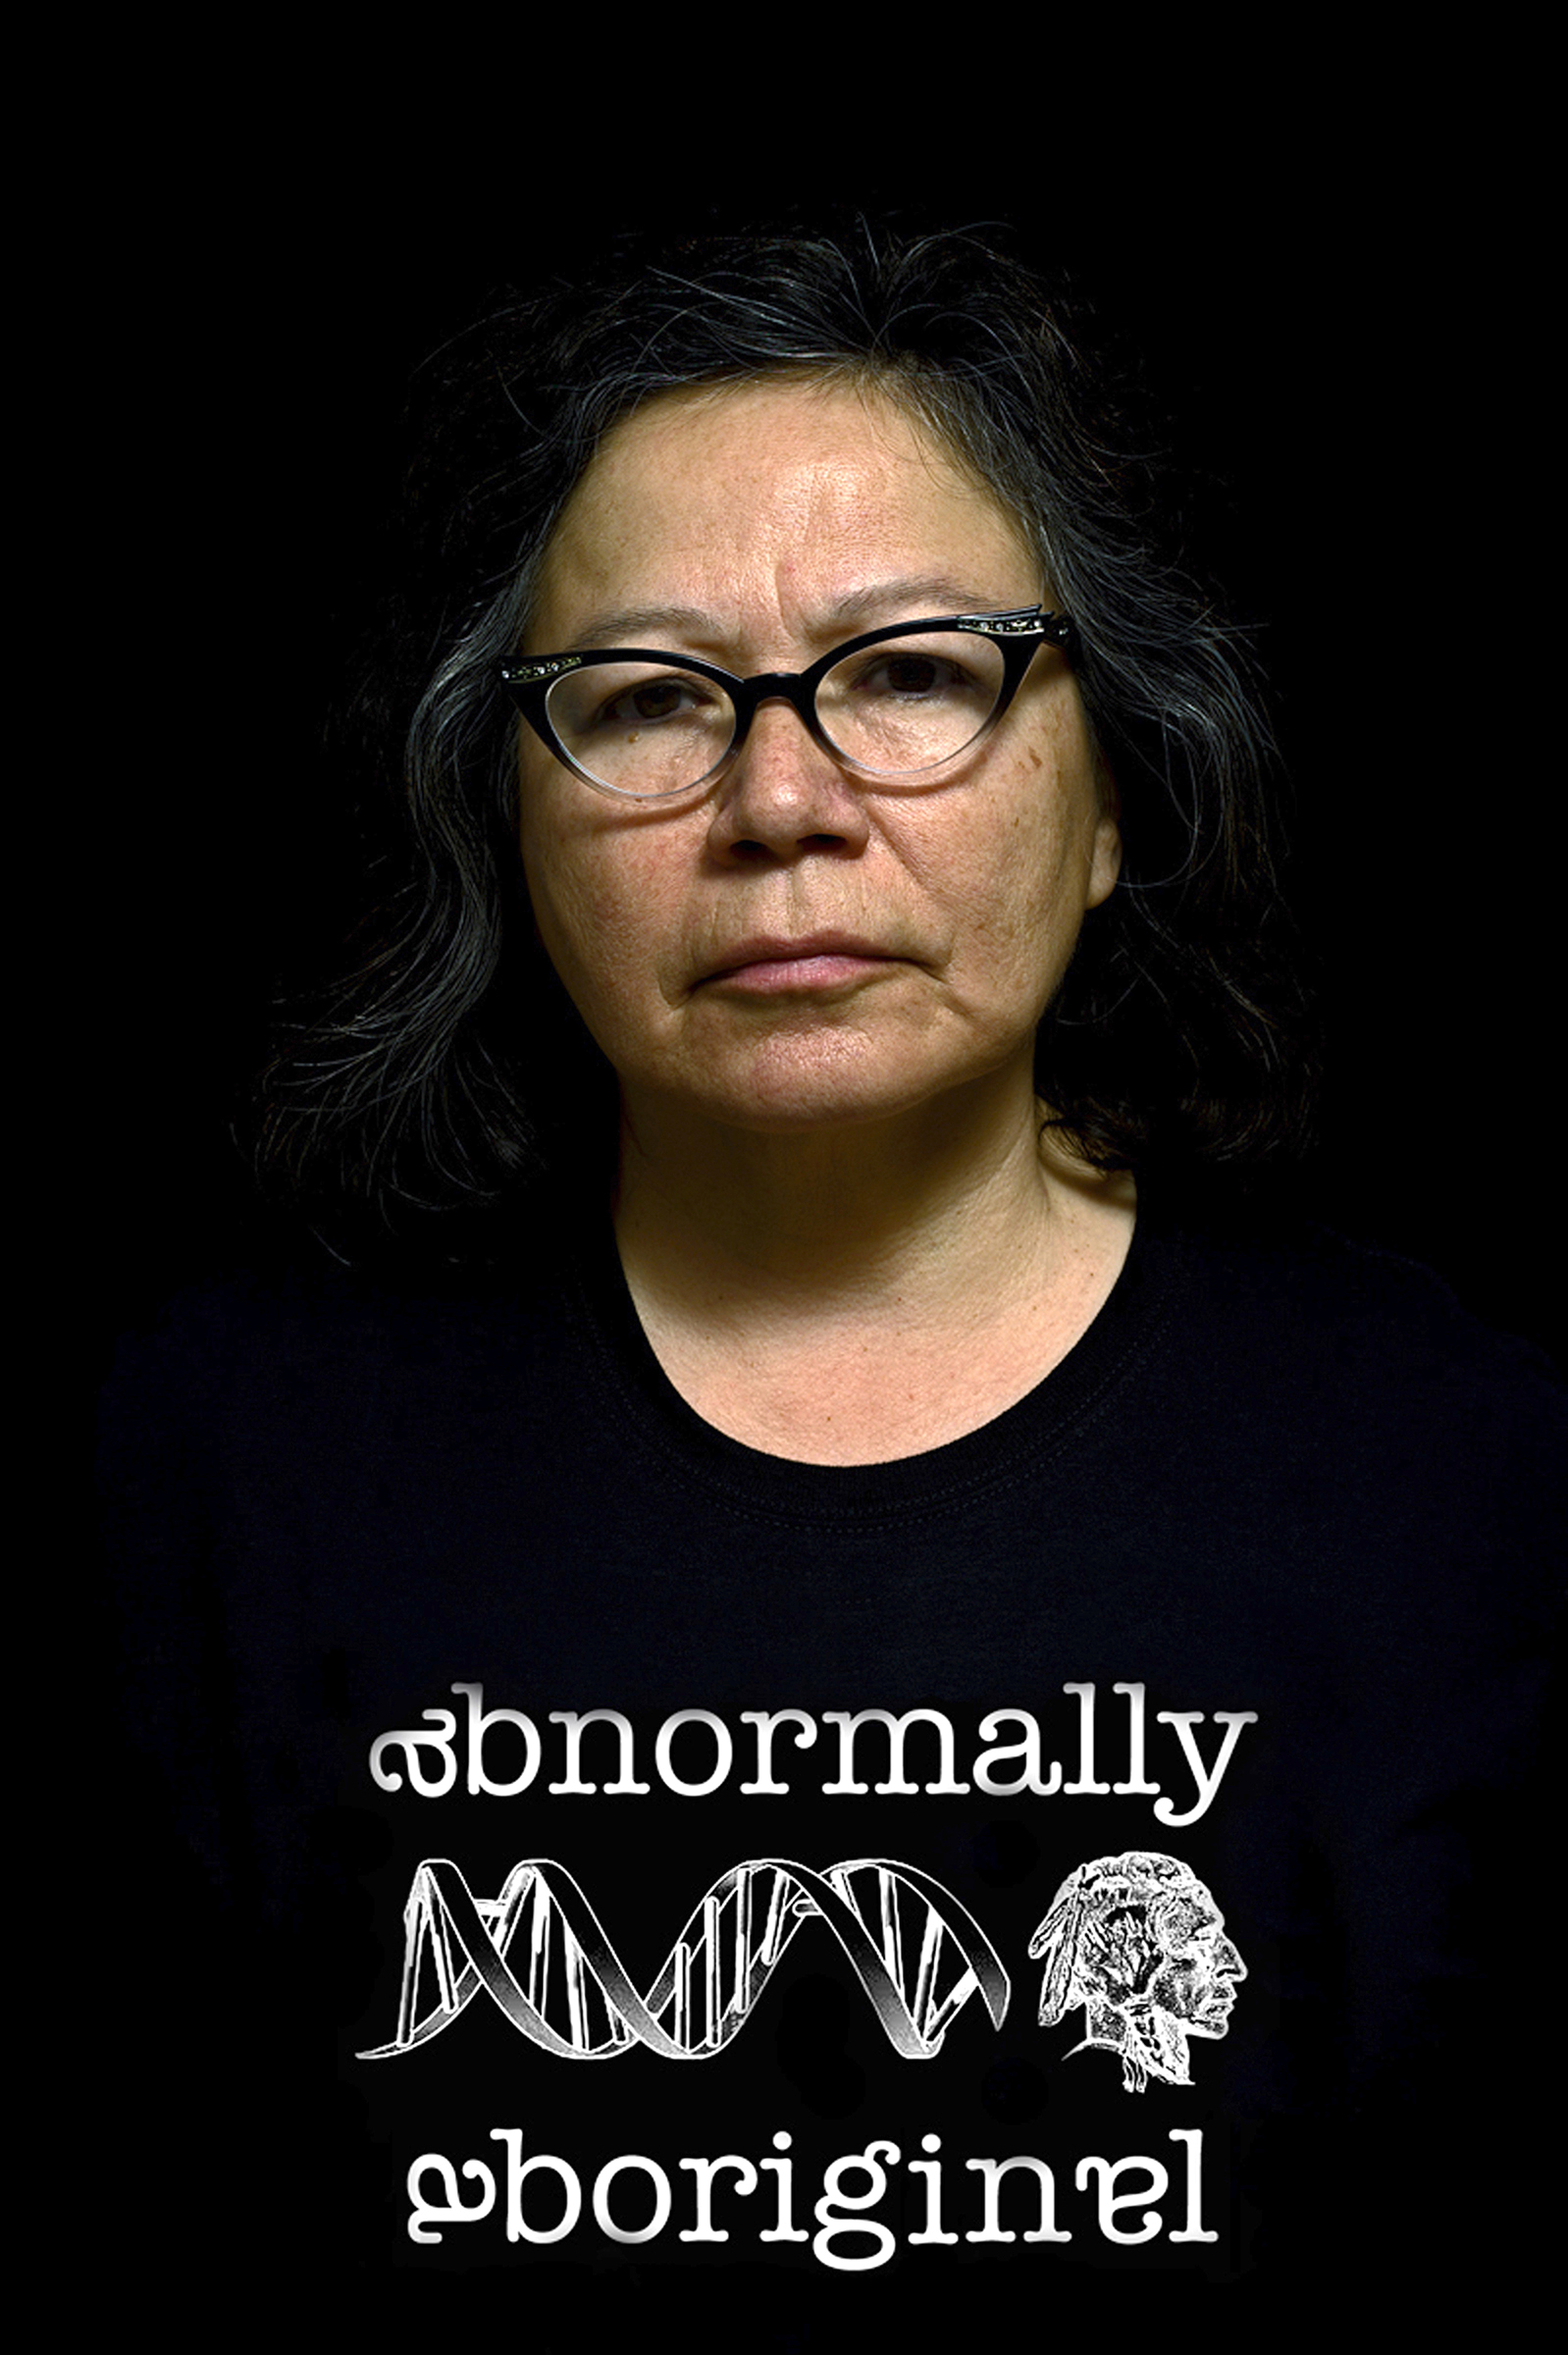     Shelley Niro , Abnormally Aboriginal, 2014. Print on canvas. Courtesy of the artist.

